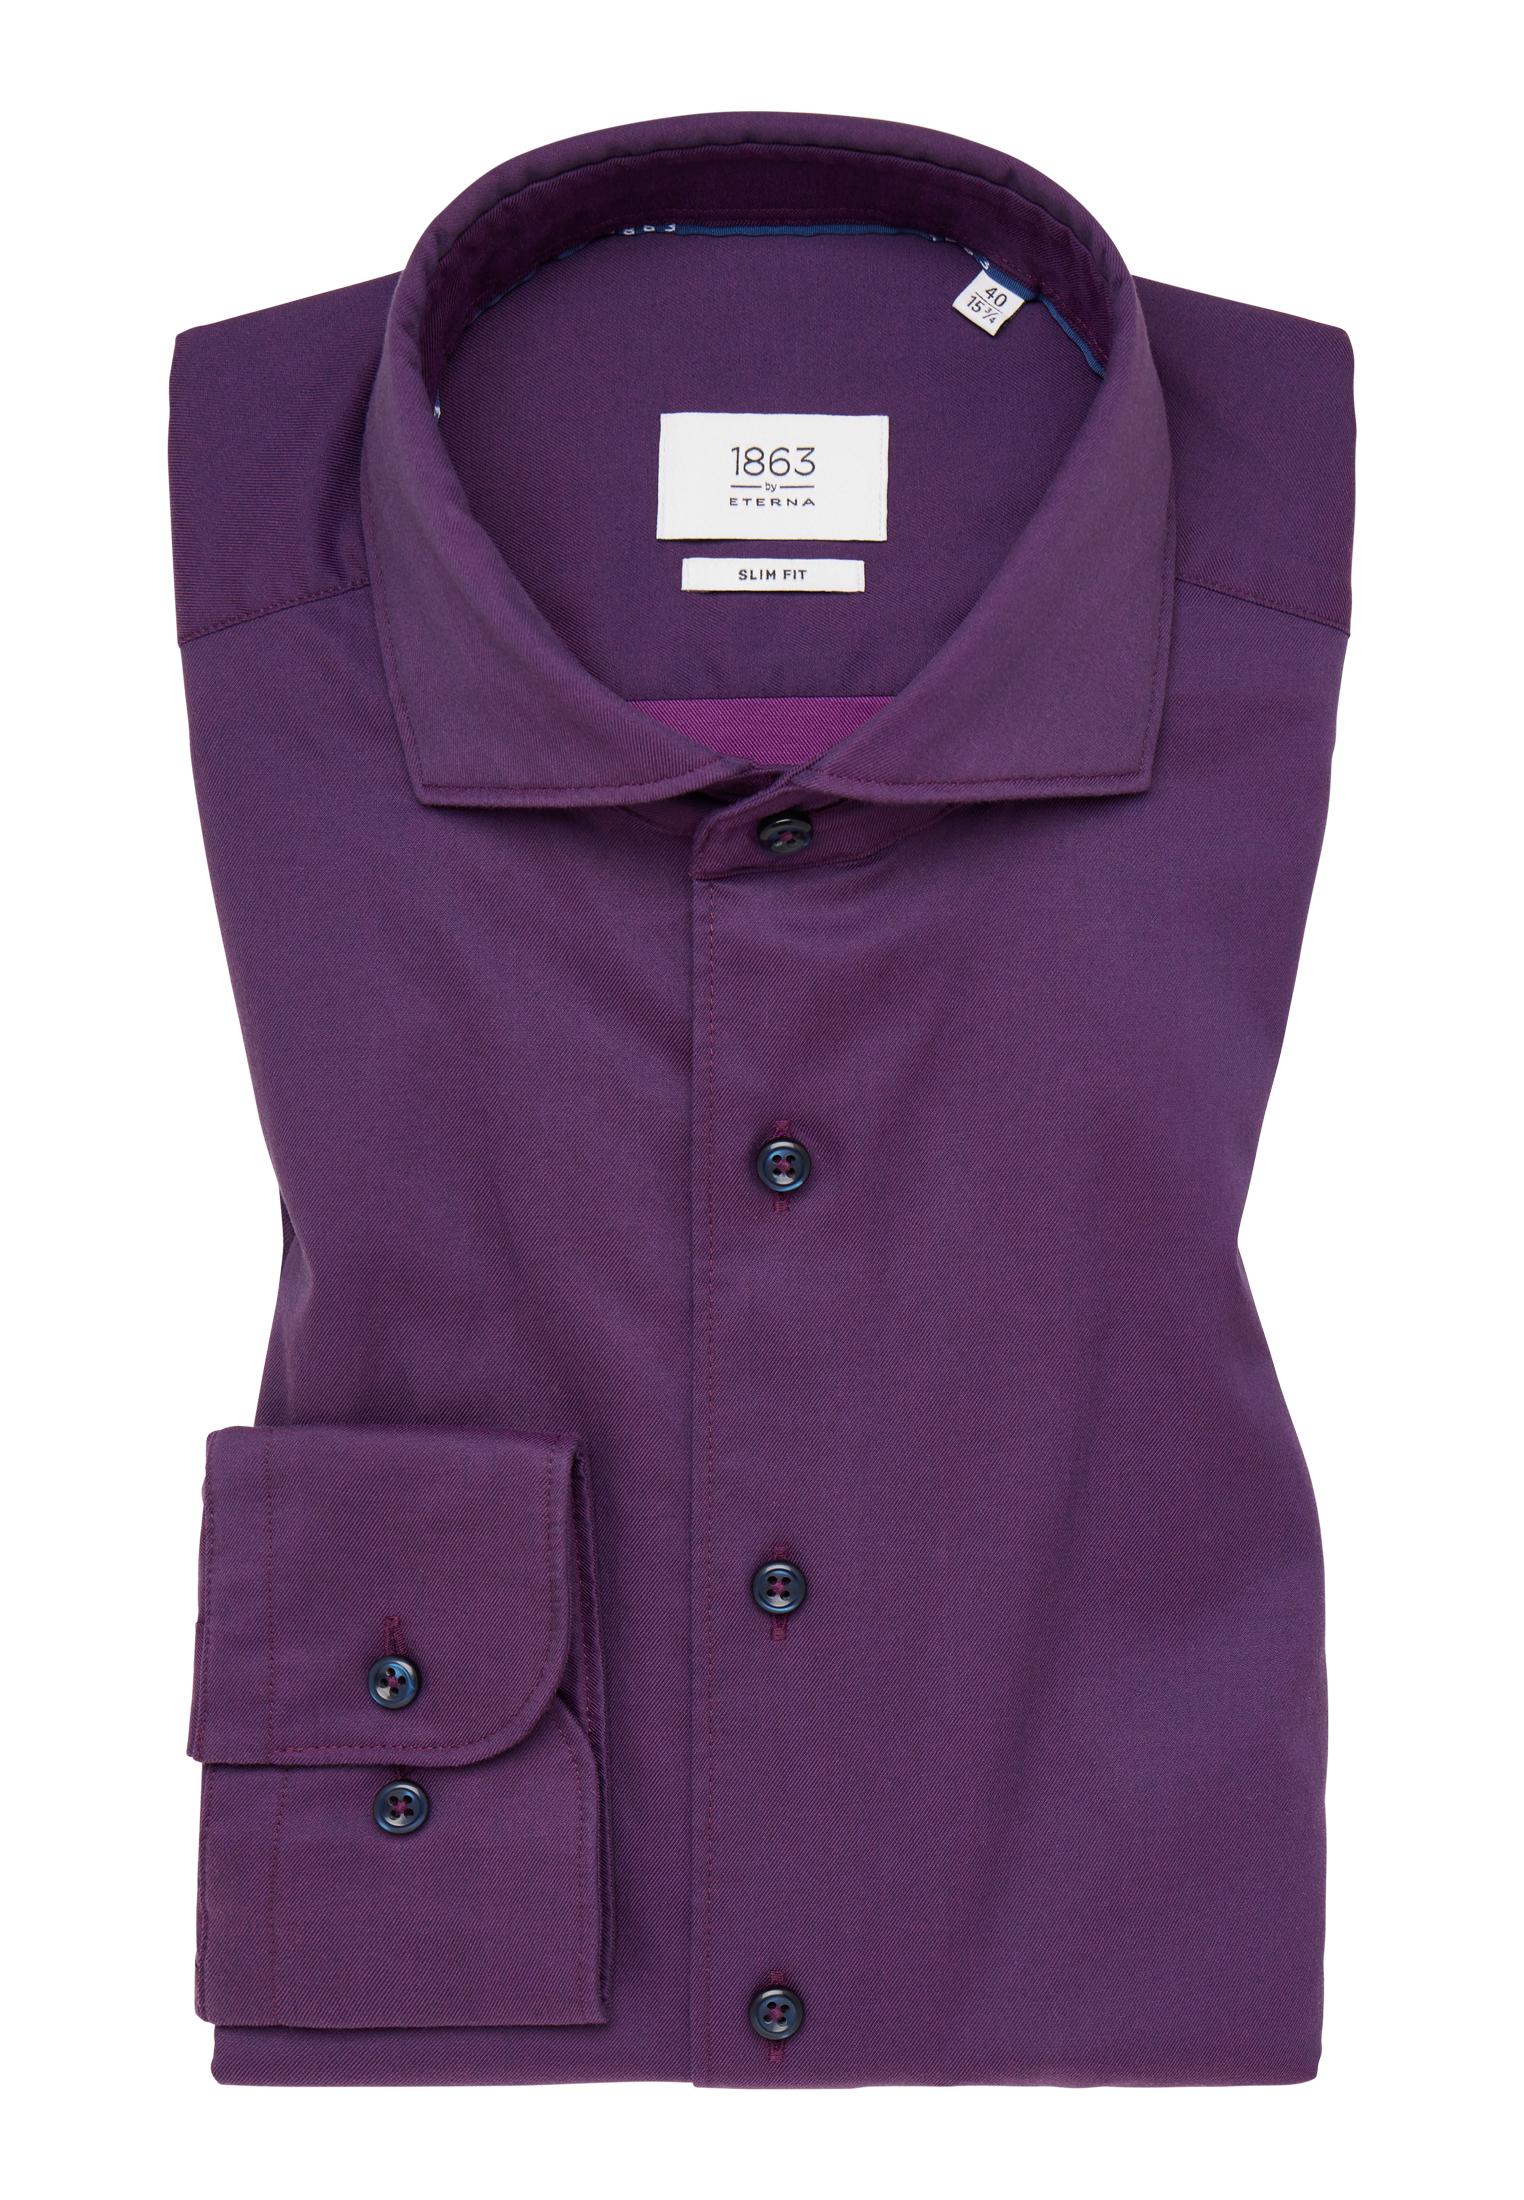 SLIM FIT Soft Luxury Shirt | in | | unifarben | burgunder 38 Langarm burgunder 1SH03482-05-81-38-1/1